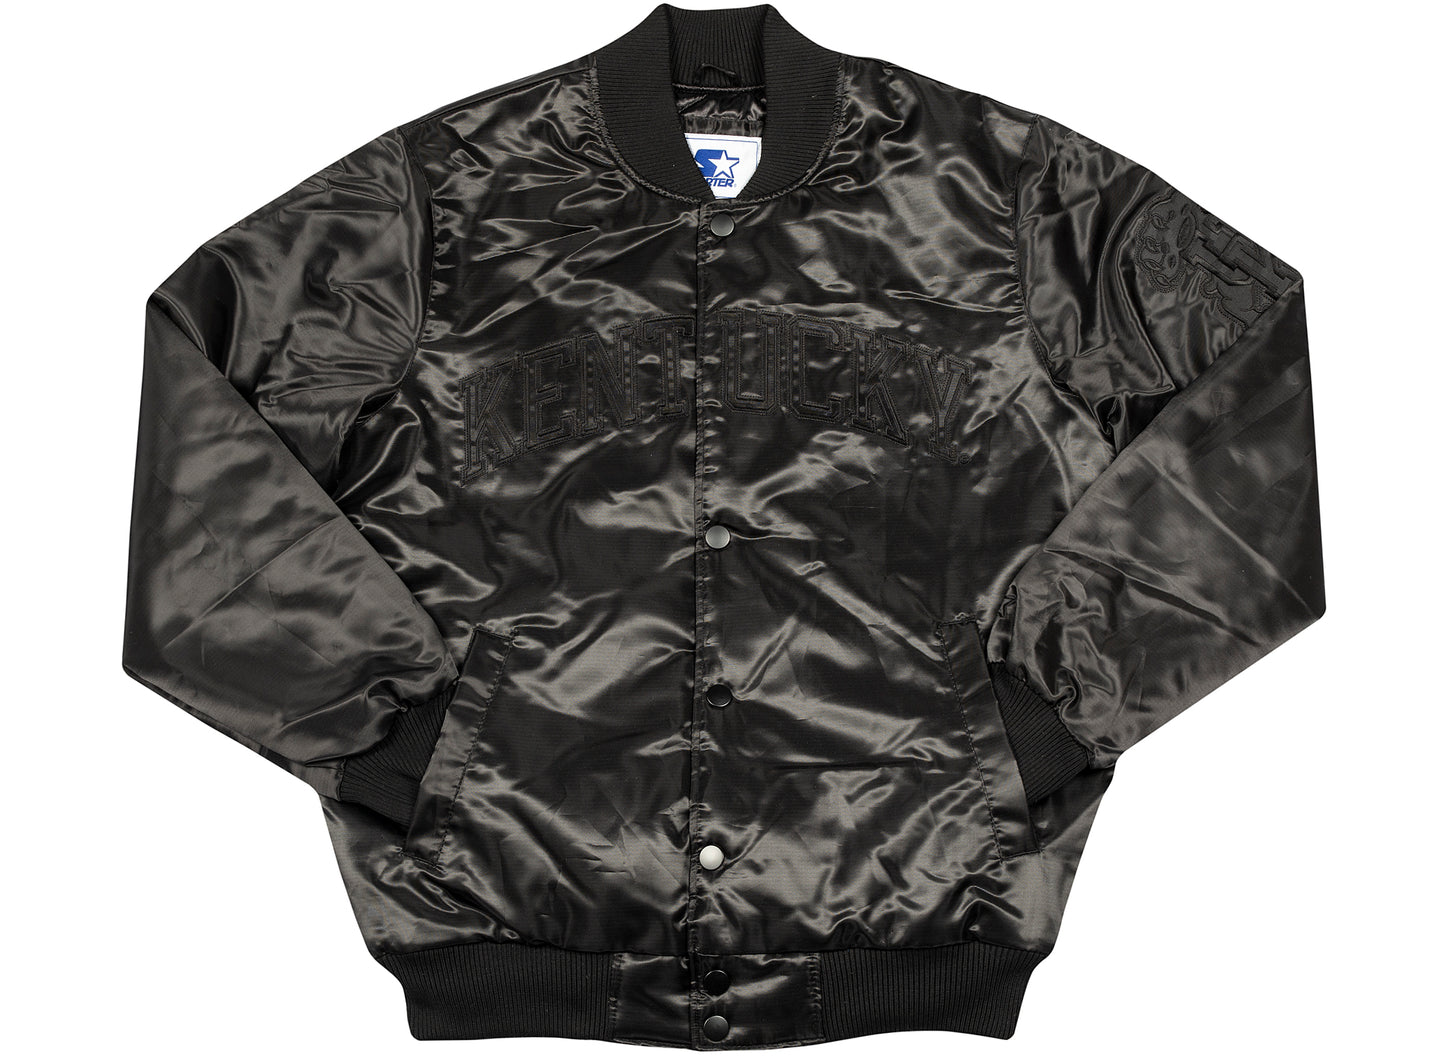 Oneness x Starter University of Kentucky Jacket - Limited Edition Triple Black Exclusive xld